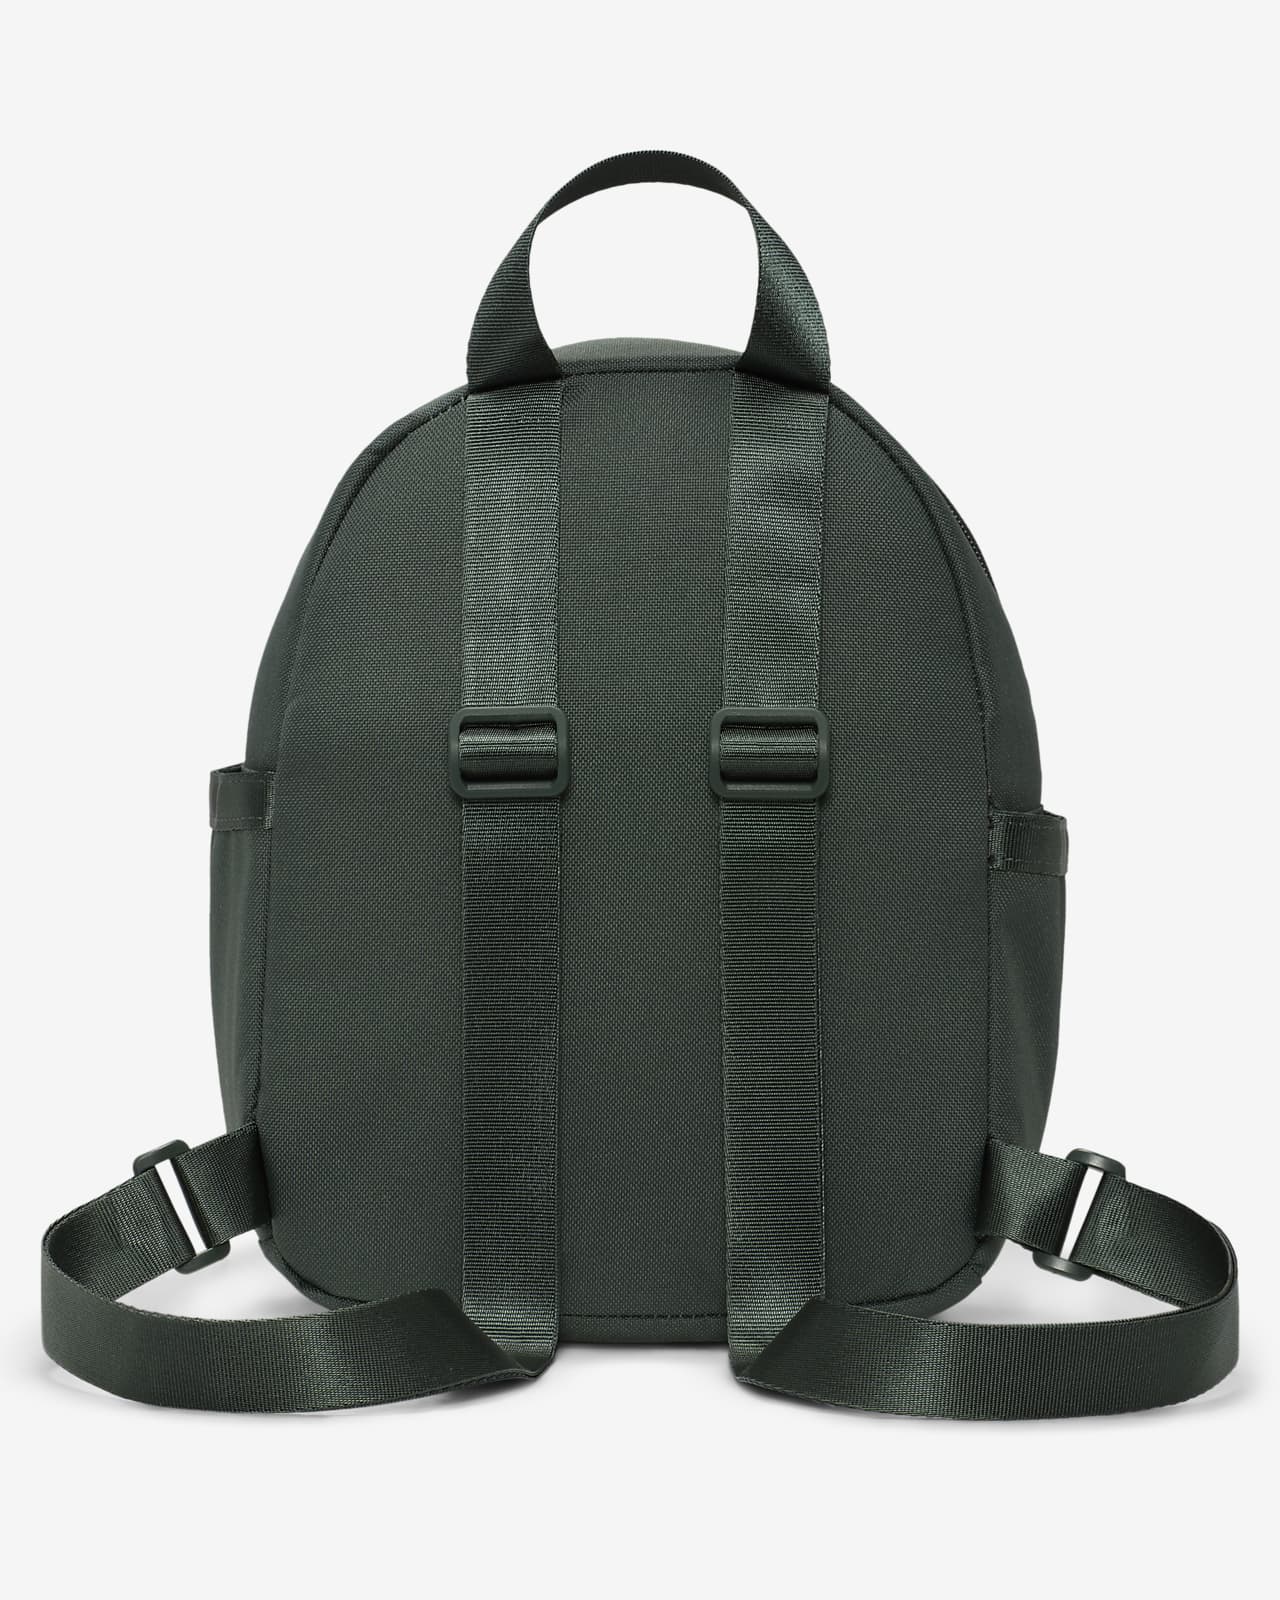 Lindsport Mini Backpack PDF Sewing Pattern, DIY Backpack Purse, Mini  Backpack Sewing Tutorial, Linds Handmade Designs - Etsy | Diy backpack  pattern, Small backpack pattern, Diy backpack